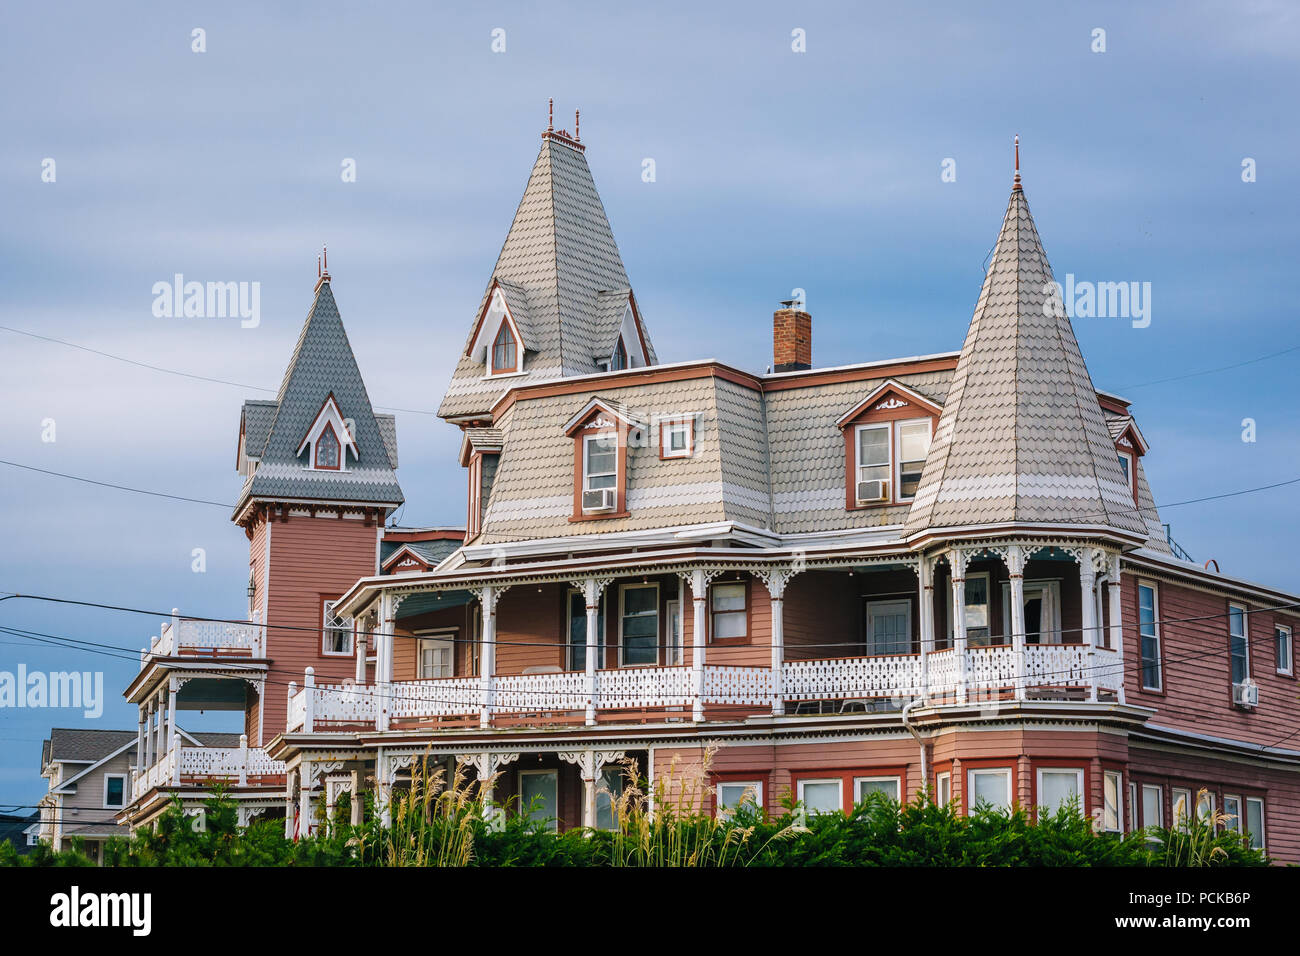 Ein viktorianisches Herrenhaus in Cape May, New Jersey. Stockfoto